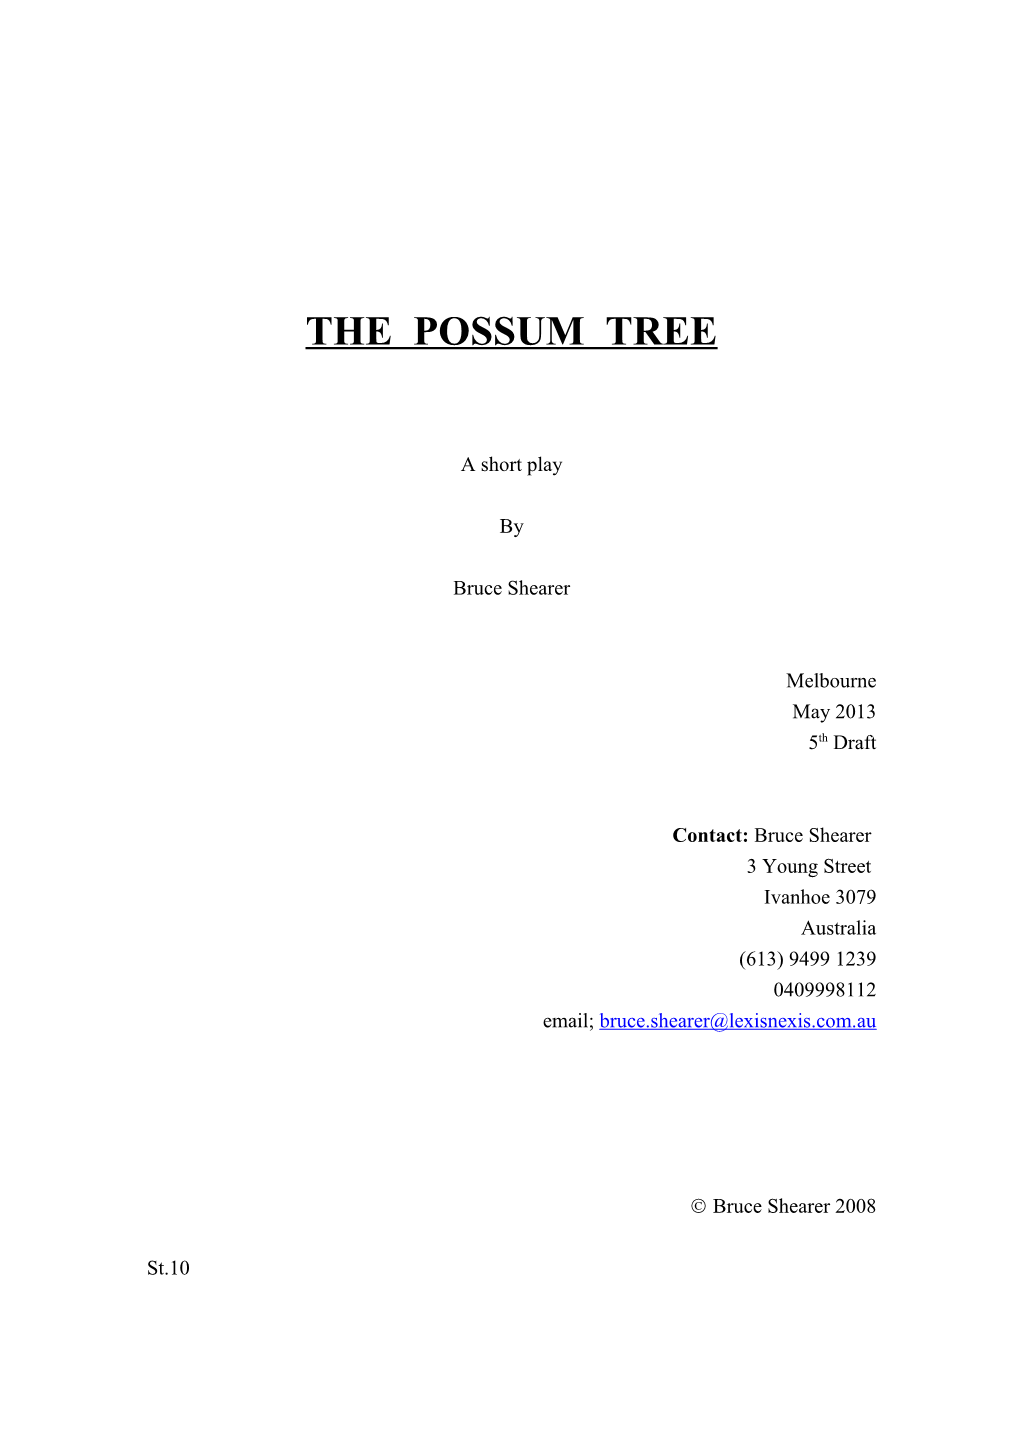 The Possum Tree